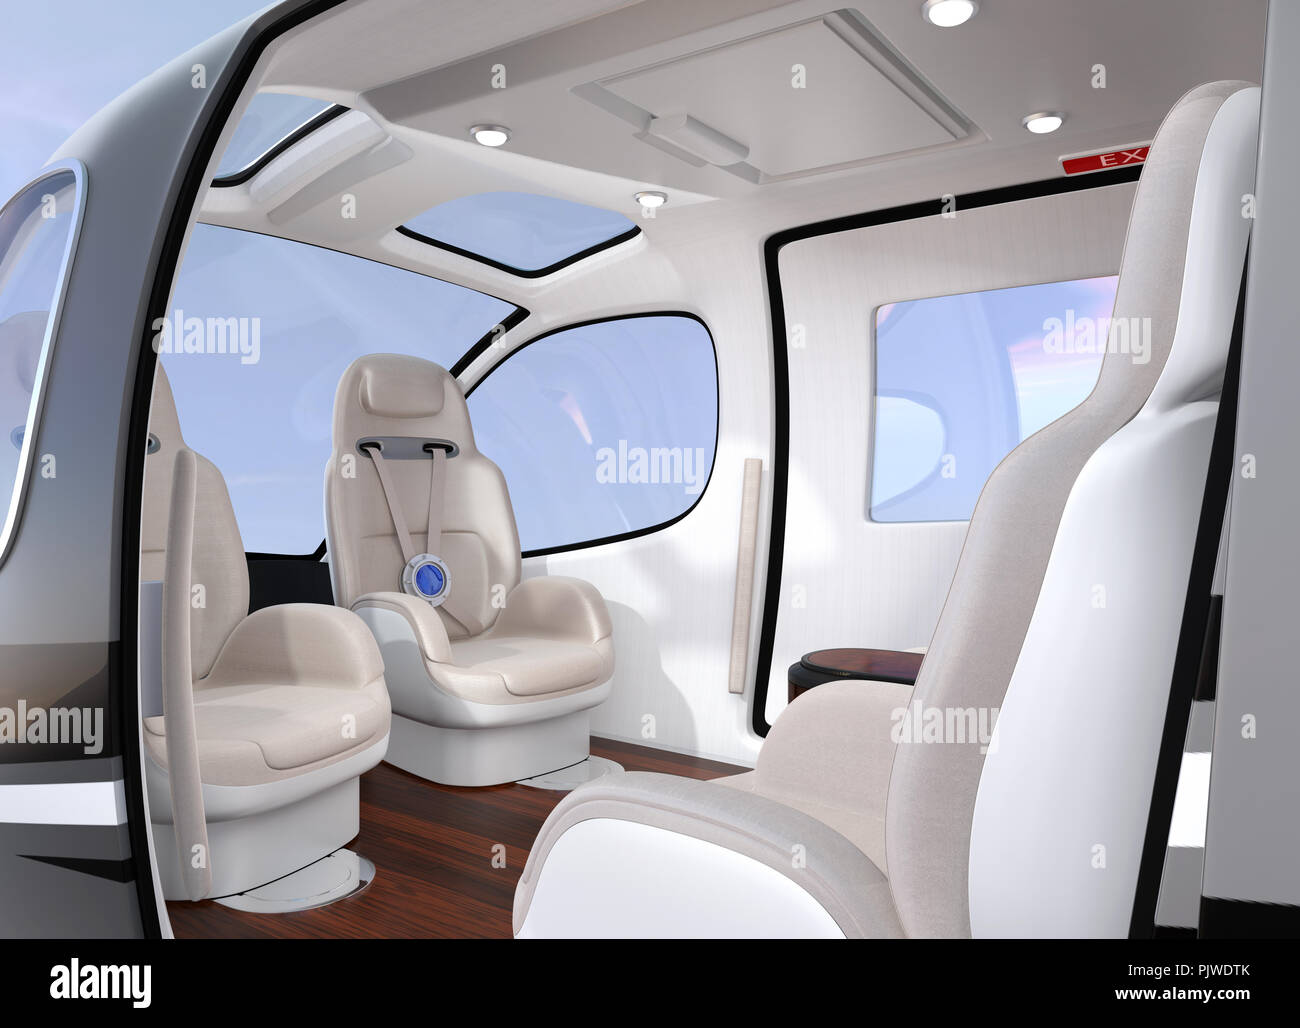 https://c8.alamy.com/comp/PJWDTK/passenger-drone-interior-with-front-passenger-seats-turned-backward-headsets-on-each-seats-3d-rendering-image-PJWDTK.jpg